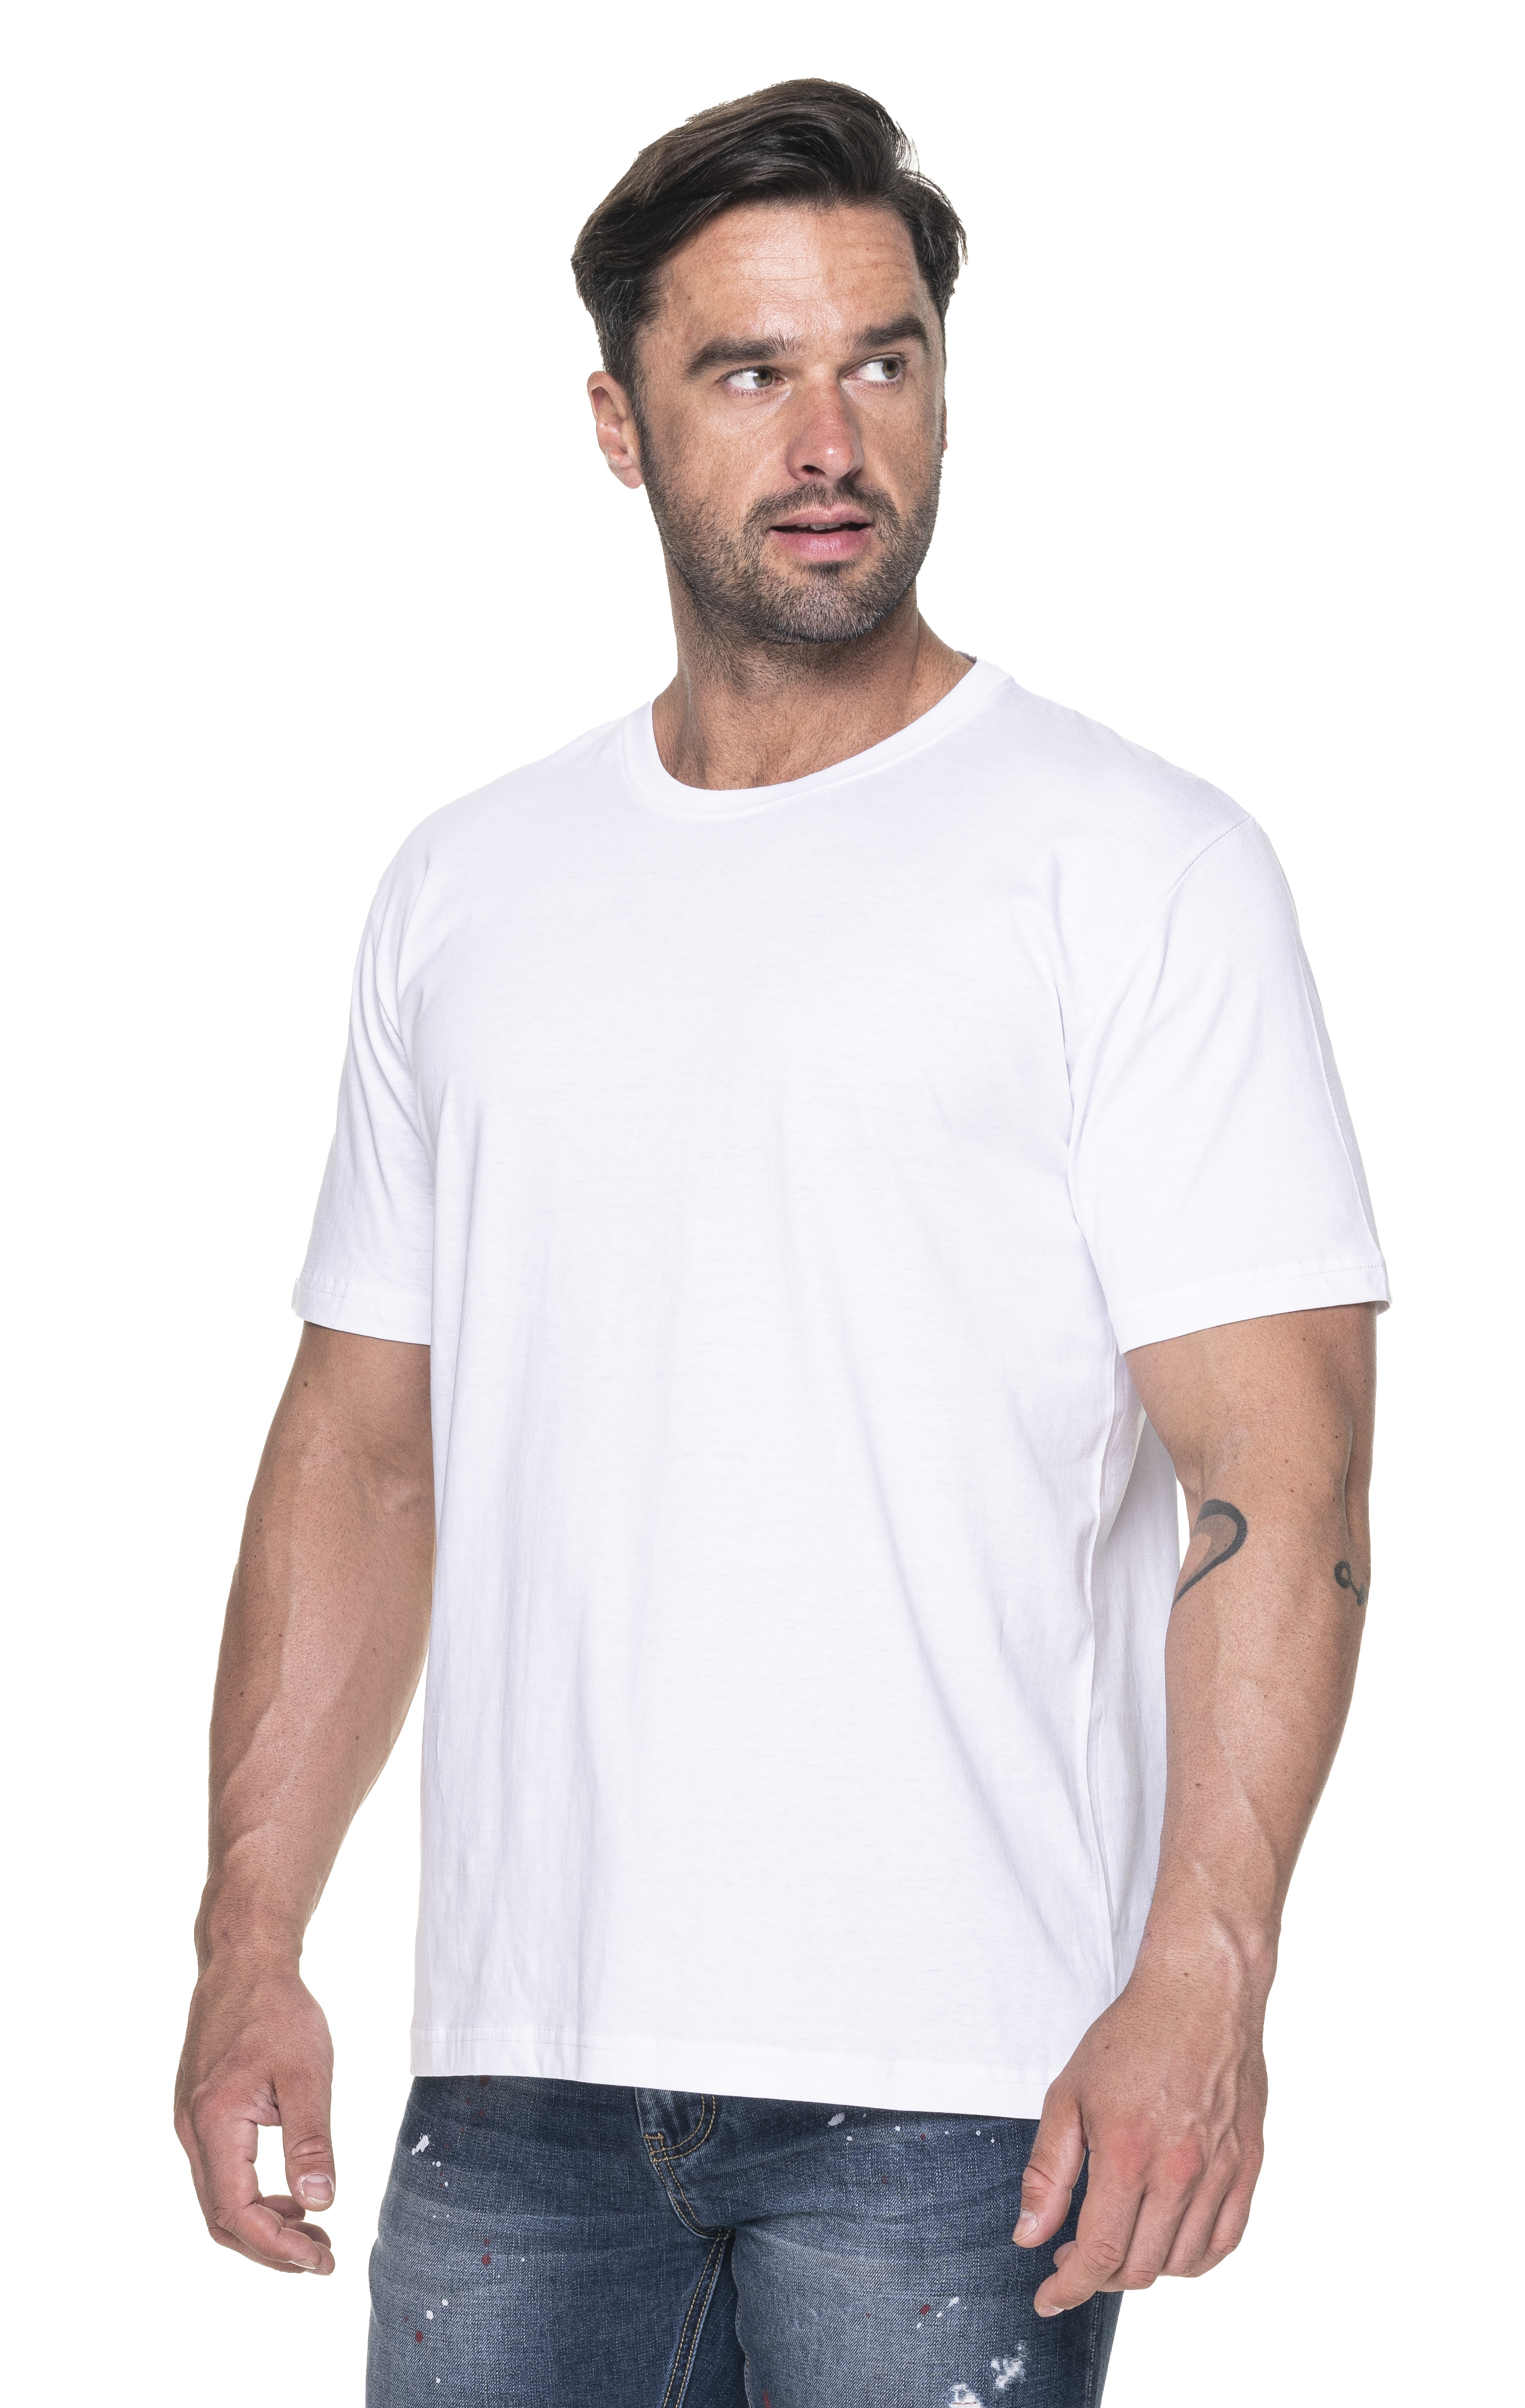 Koszulka Promostars Heavy 170 - biała NO LABEL